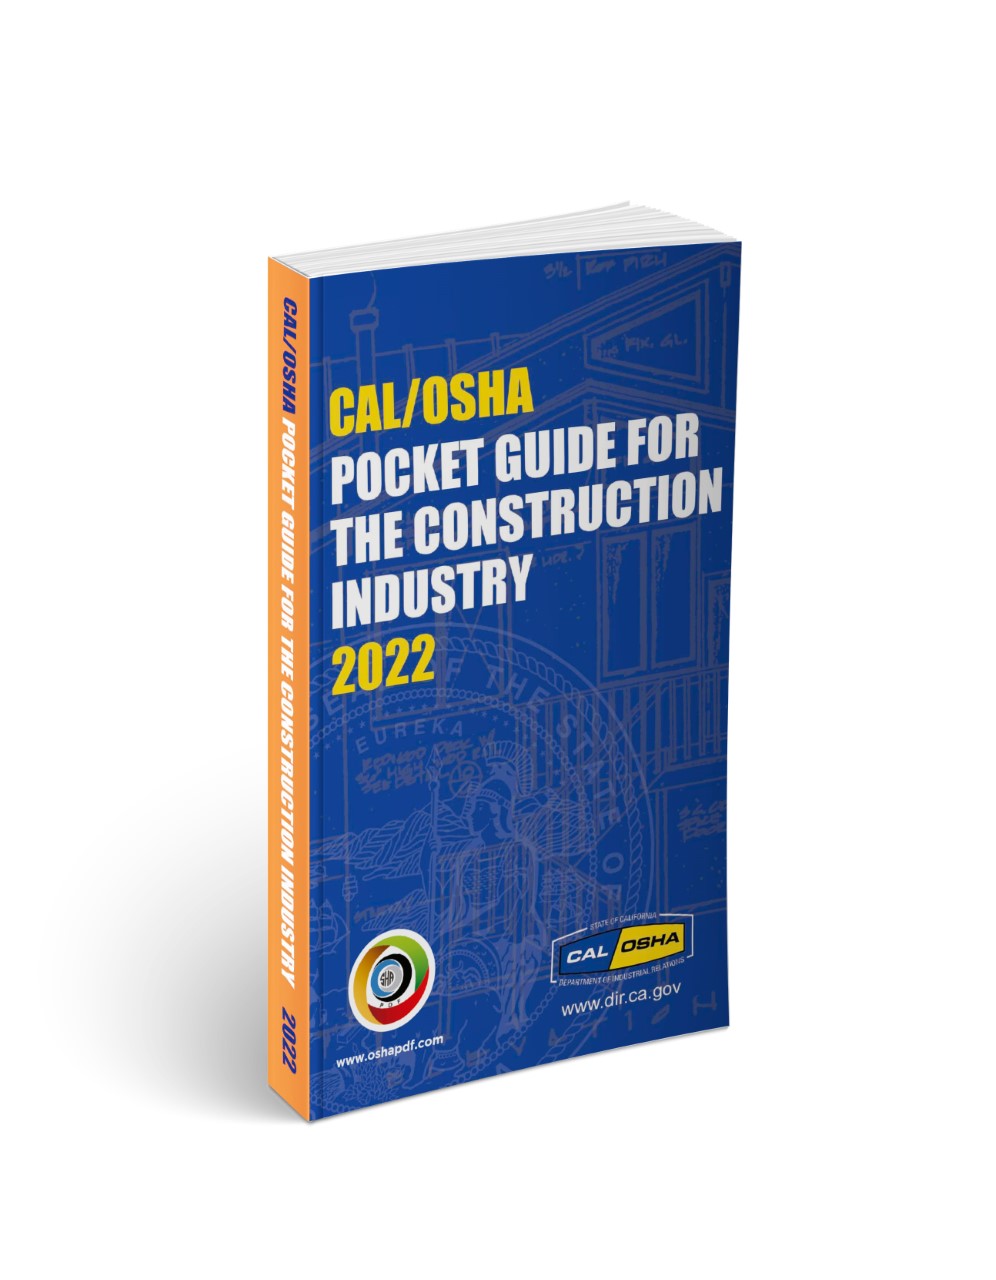 Cal/OSHA Construction Industry Pocket Guide